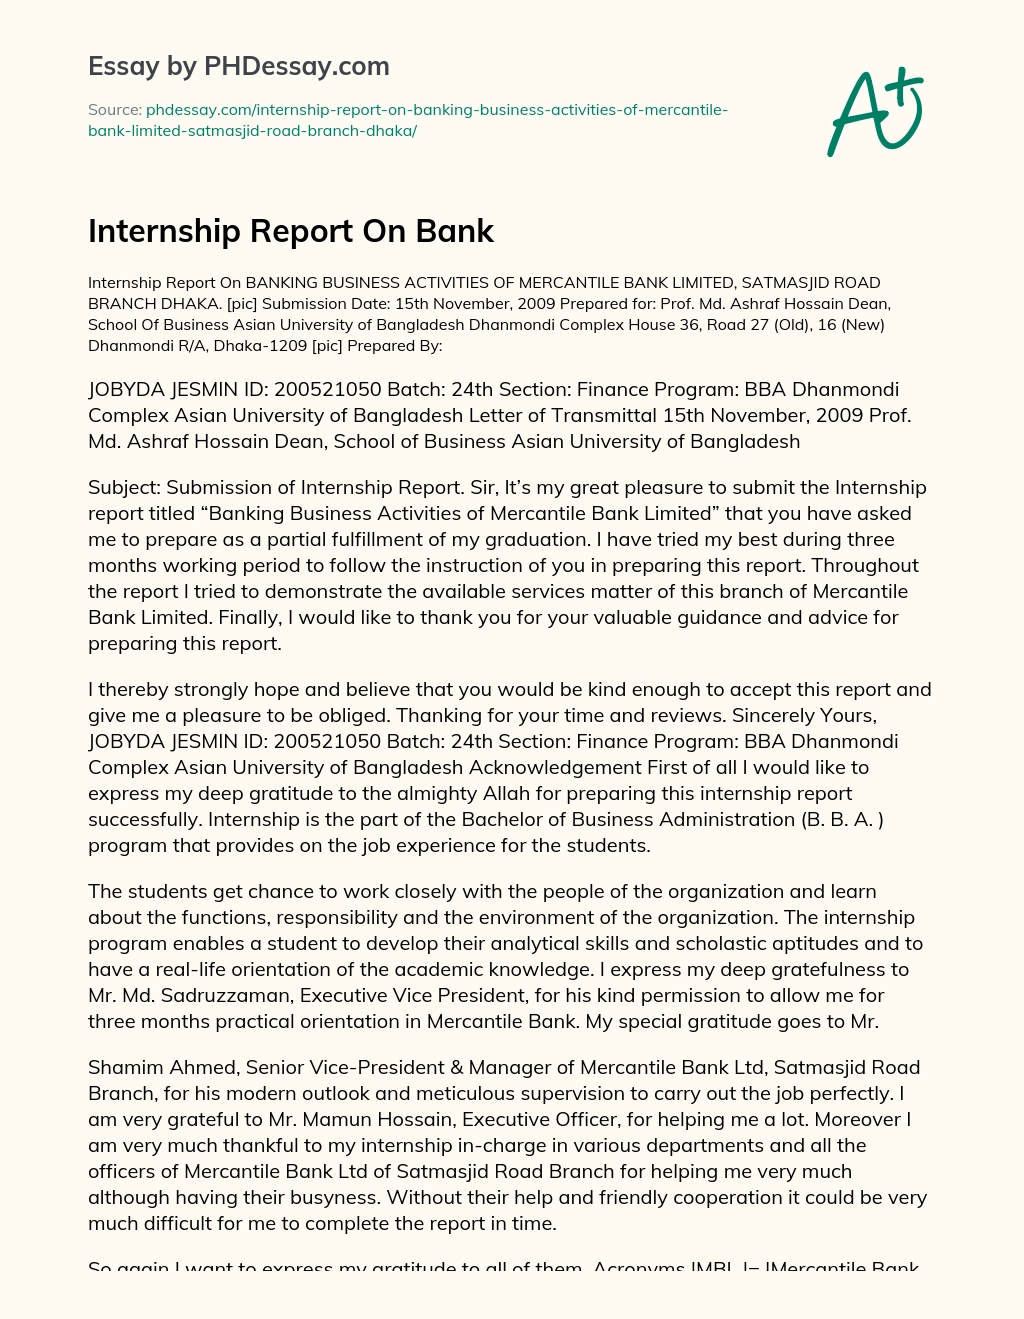 Internship Report On Bank essay